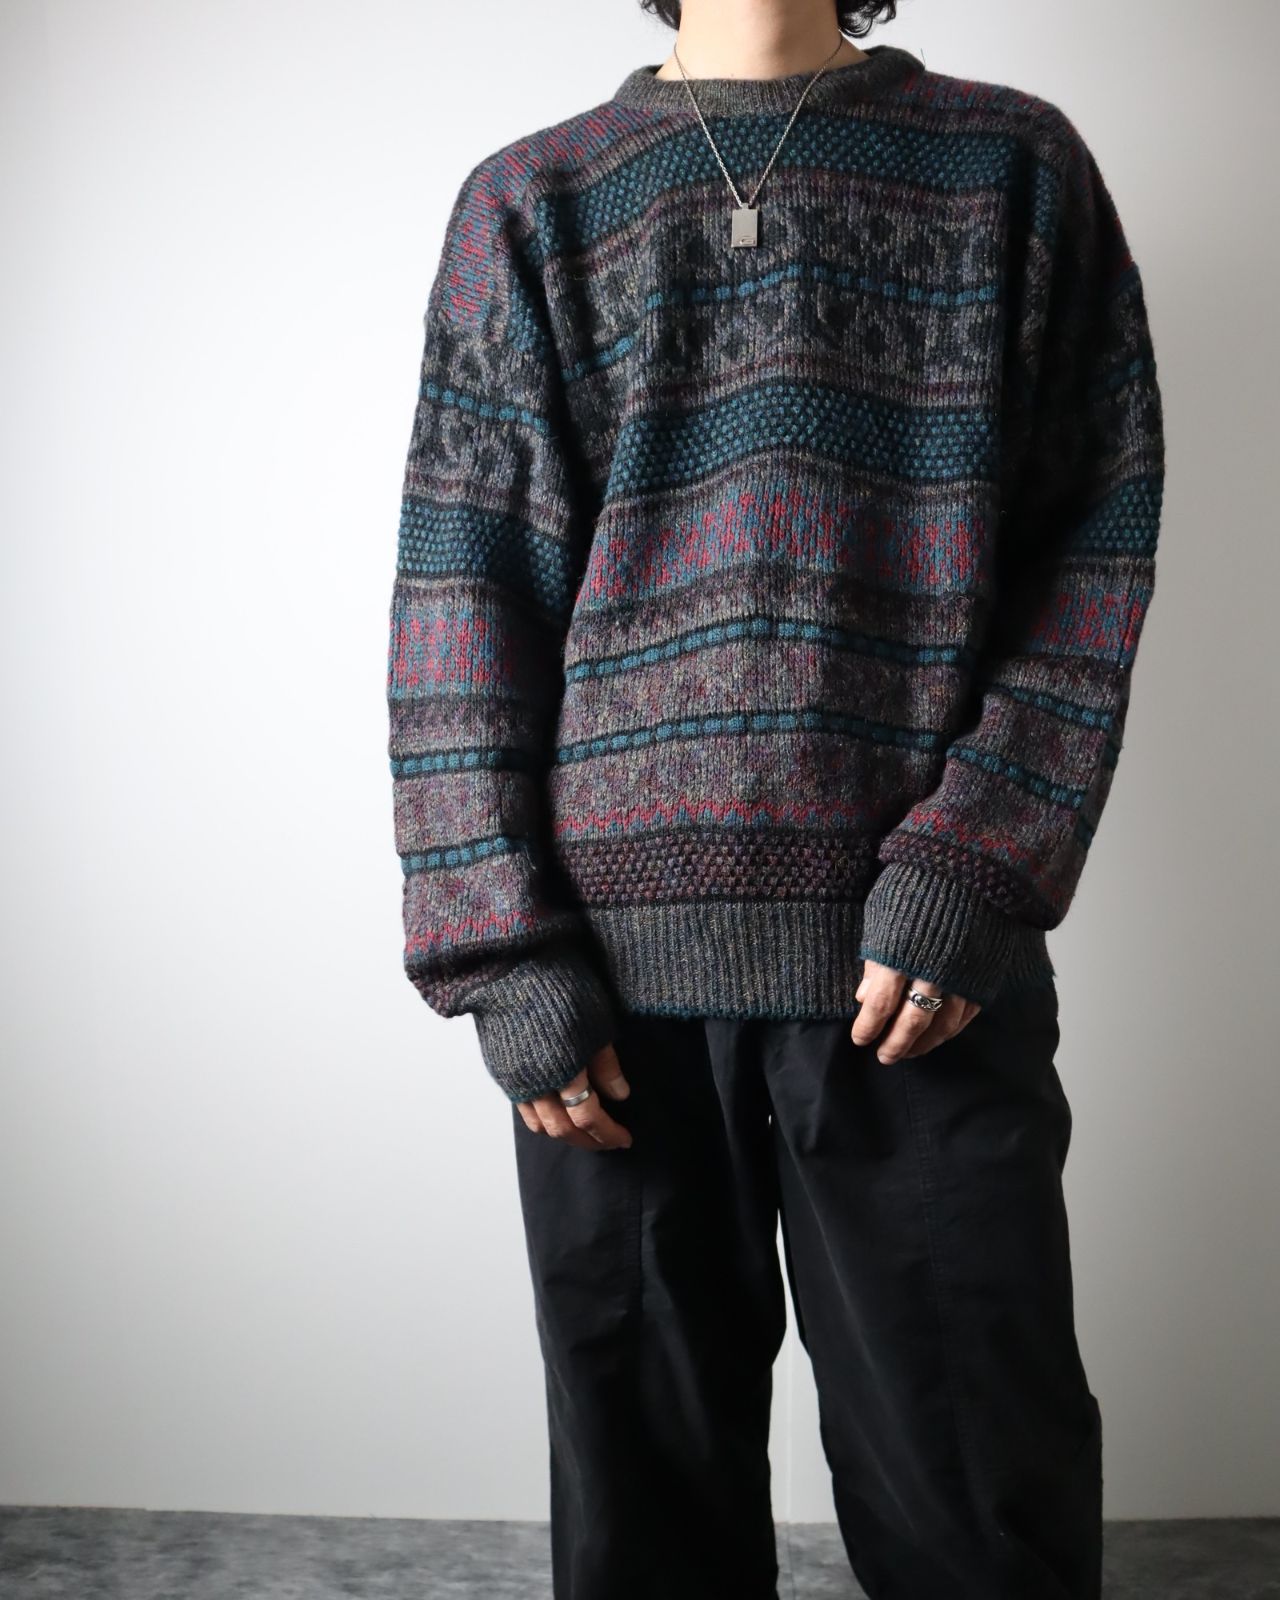 arieニット✿【vintage】オルテガ調 総柄 デザイン ウール混 ニット セーター 英国製